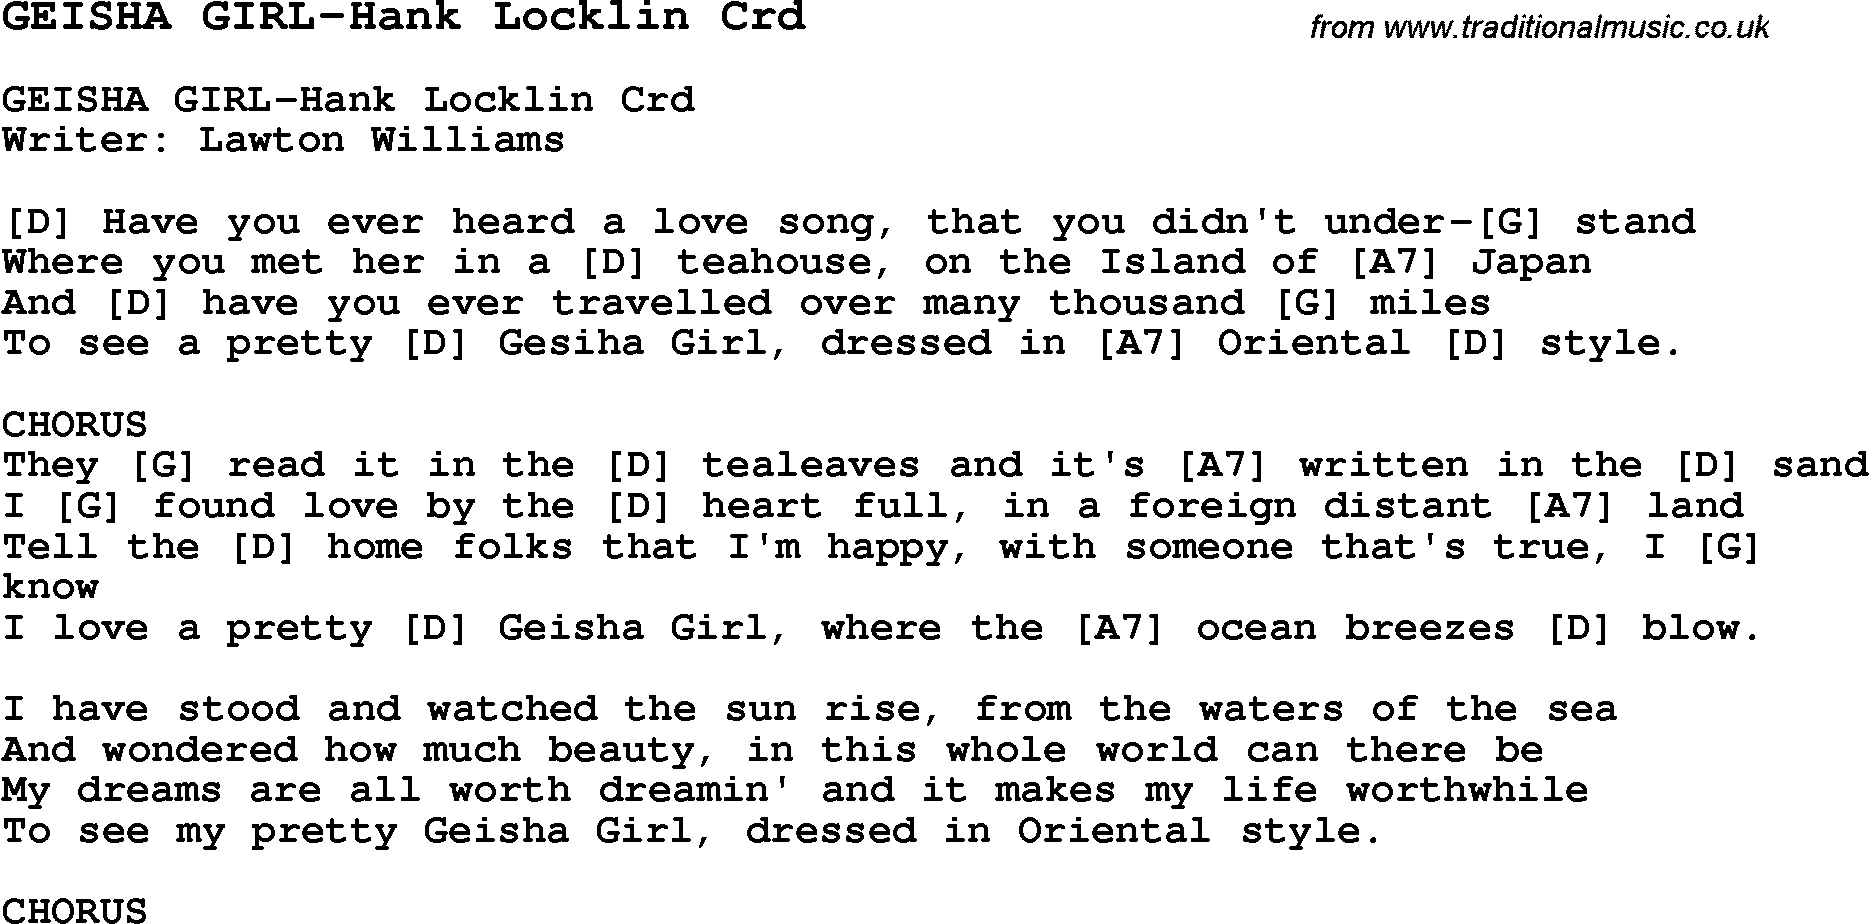 Skiffle Song Lyrics for Geisha Girl-Hank Locklin with chords for Mandolin, Ukulele, Guitar, Banjo etc.